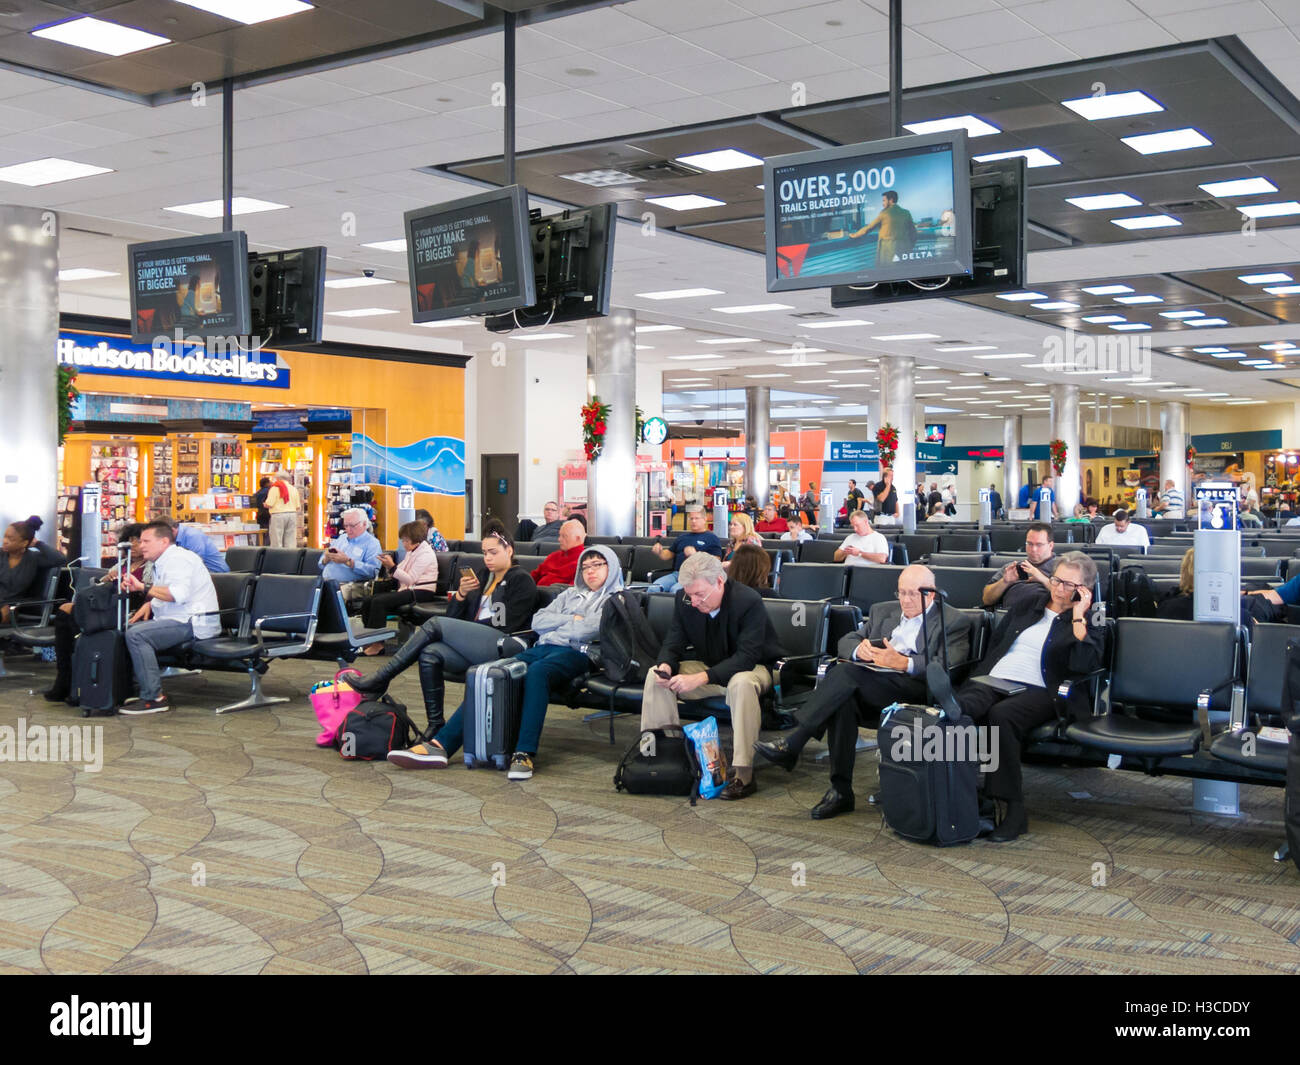 Persone sedute e in attesa di Fort Lauderdale Hollywood International Airport in Florida, Stati Uniti d'America Foto Stock